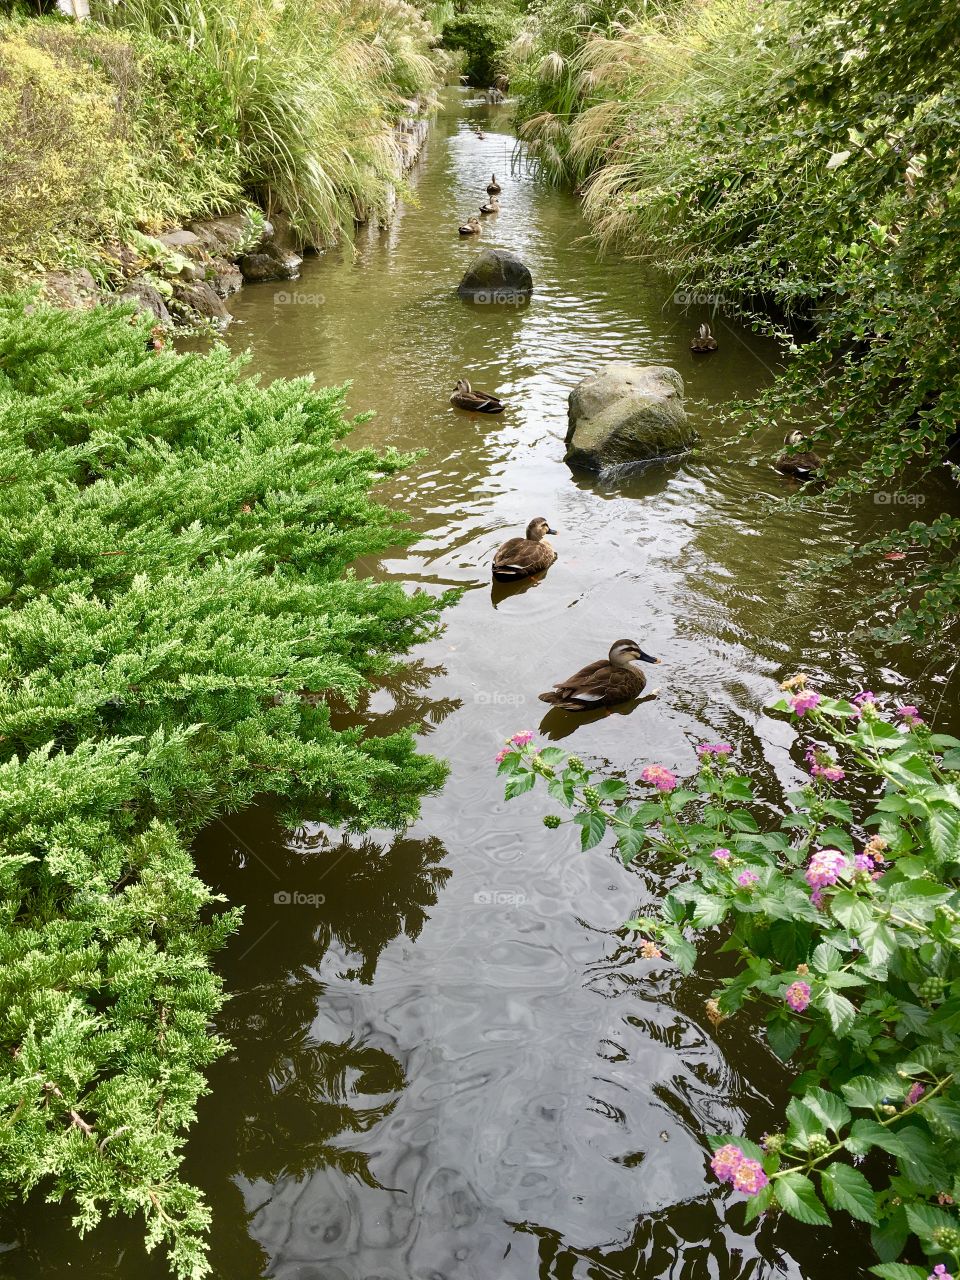 duck/nature